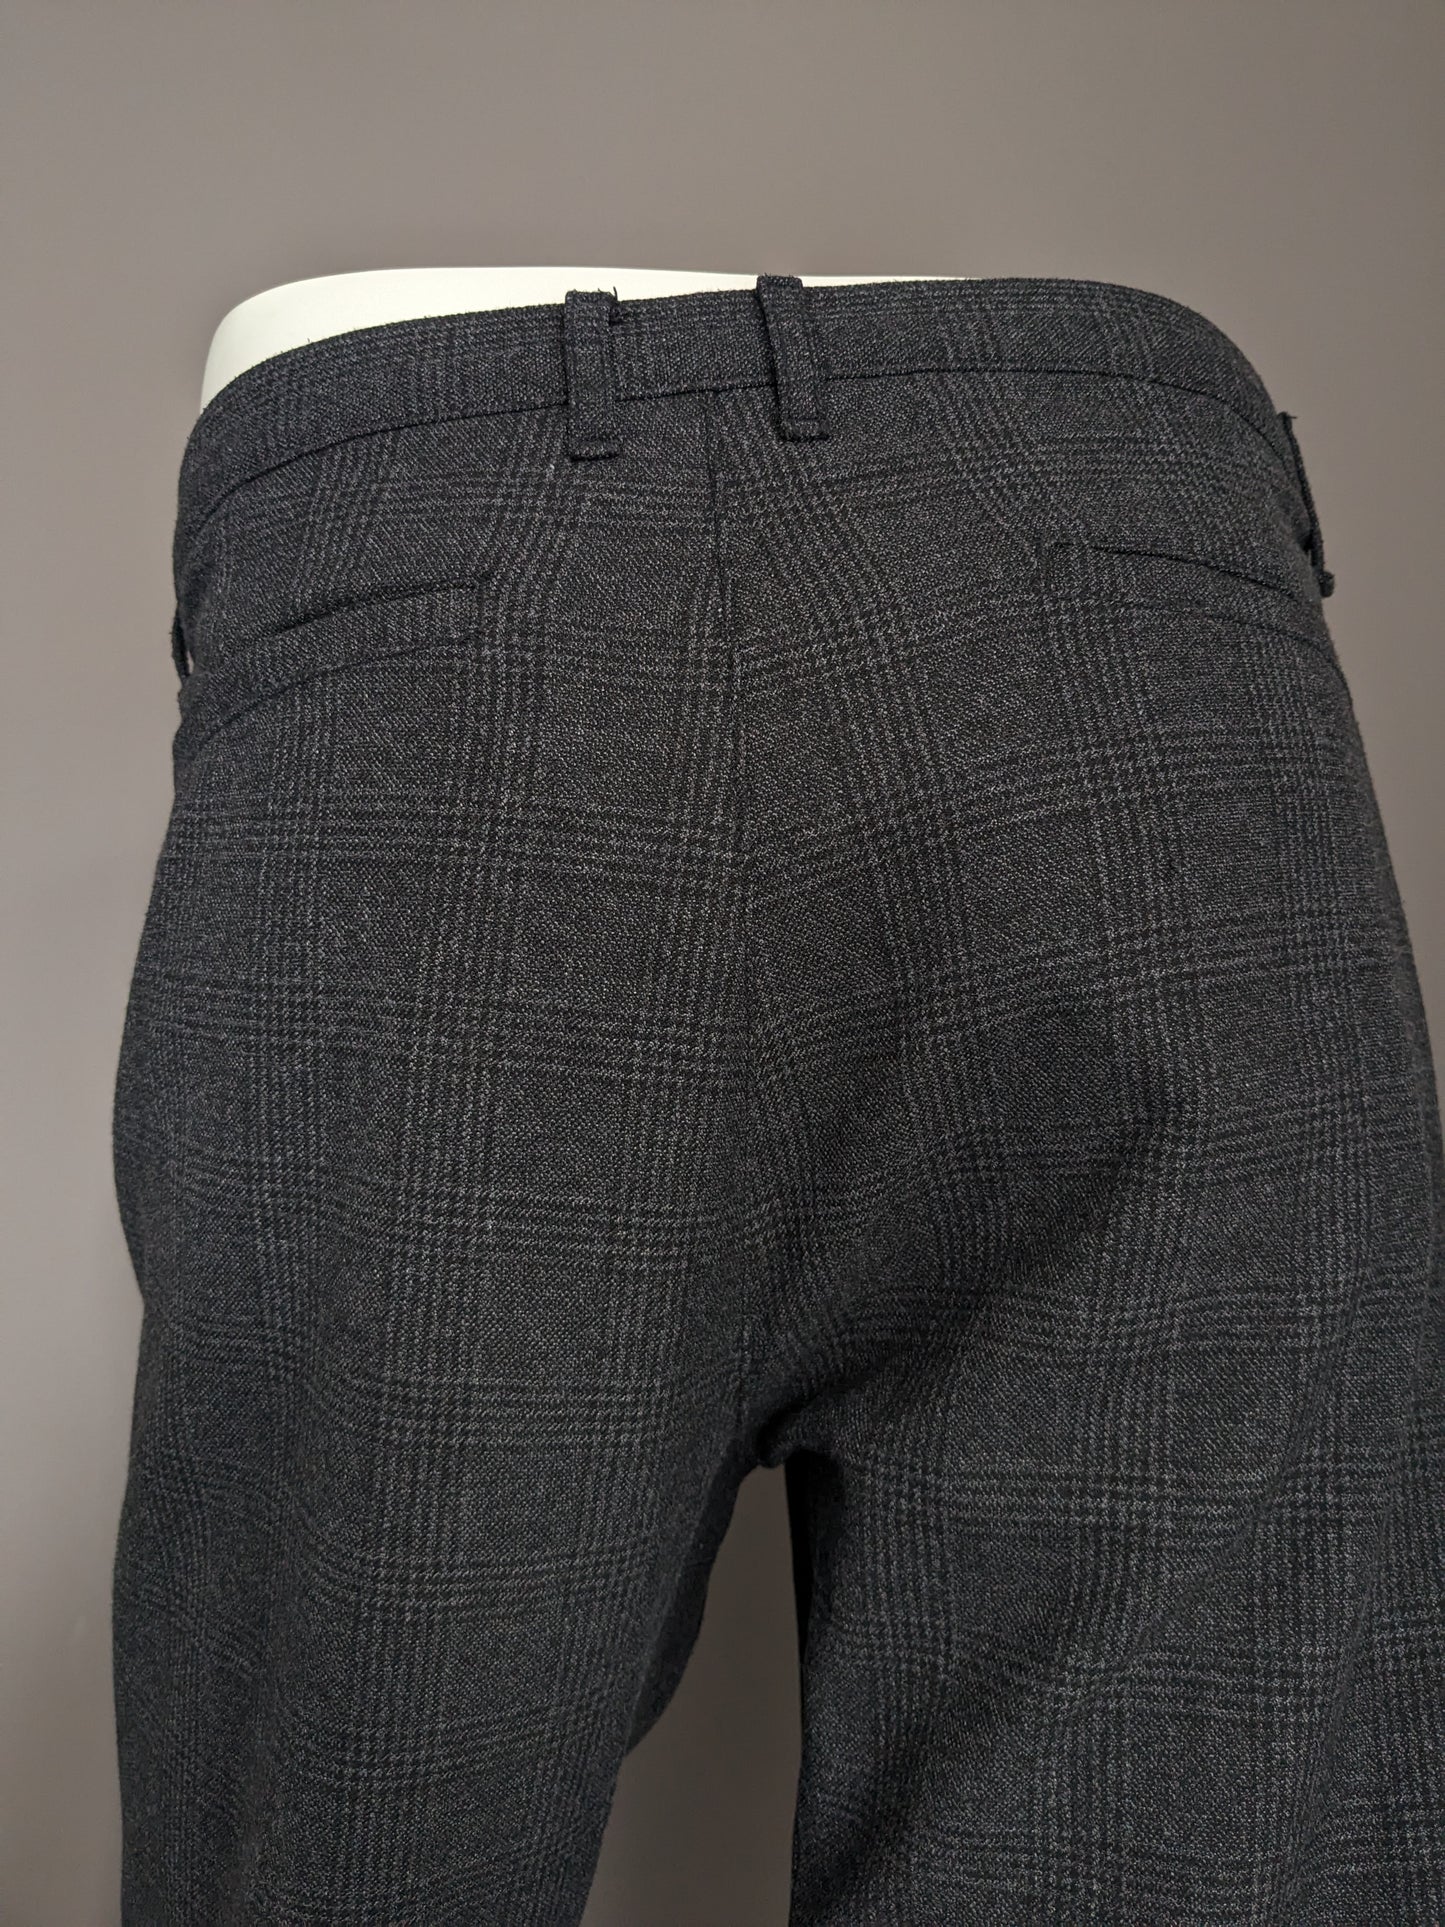 LCW Vision pantalon / broek. Grijs Zwart geruit. Cropped Slim Fit. W36 - L30.